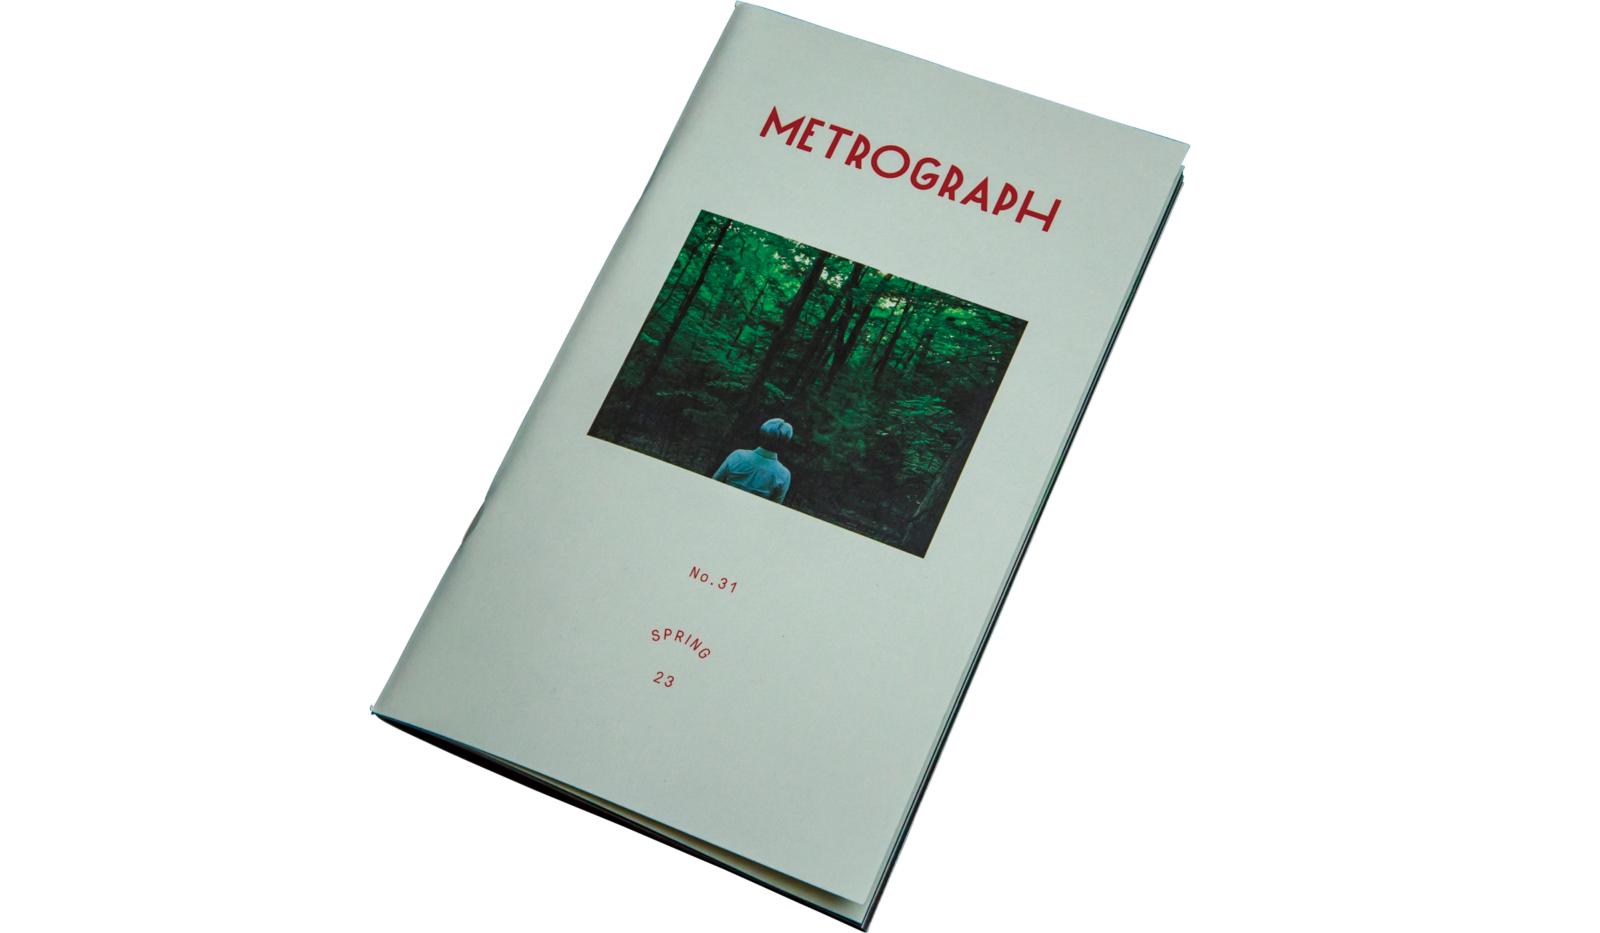 METROGRAPH(メトログラフ)の無料の季刊誌パンフレット